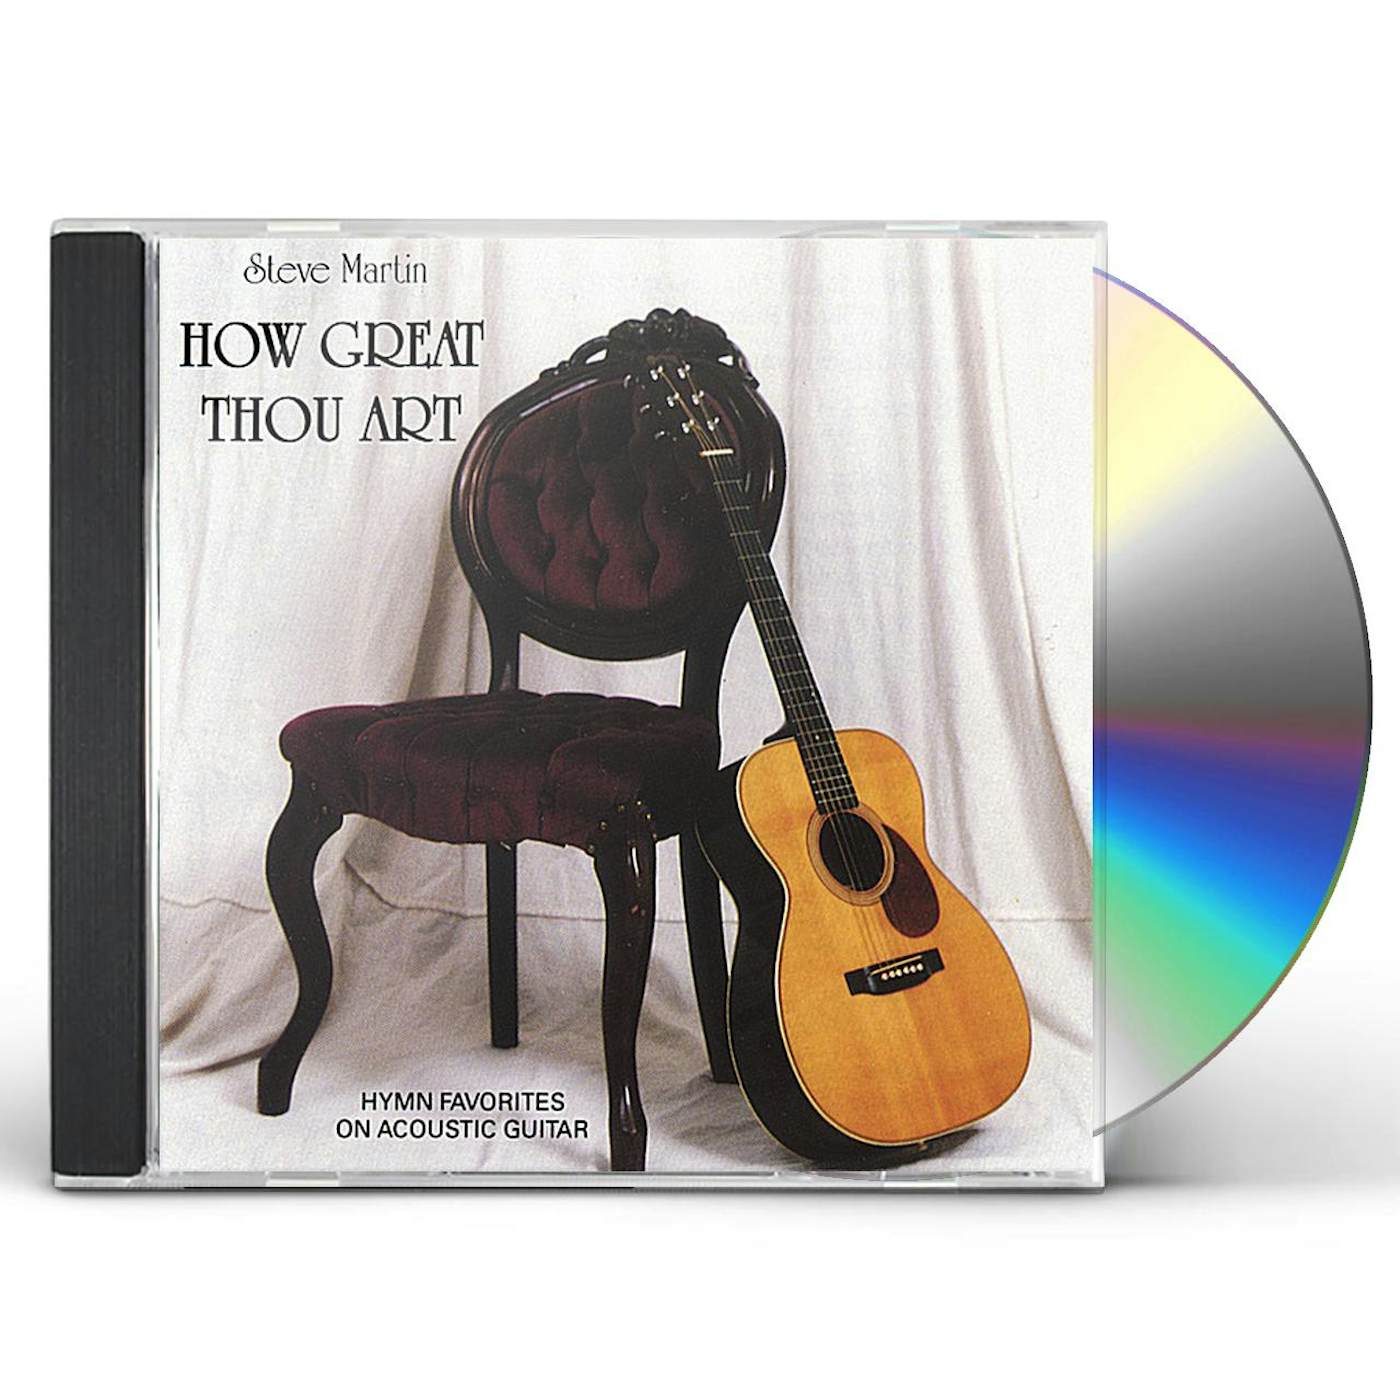 Steve Martin HOW GREAT THOU ART CD